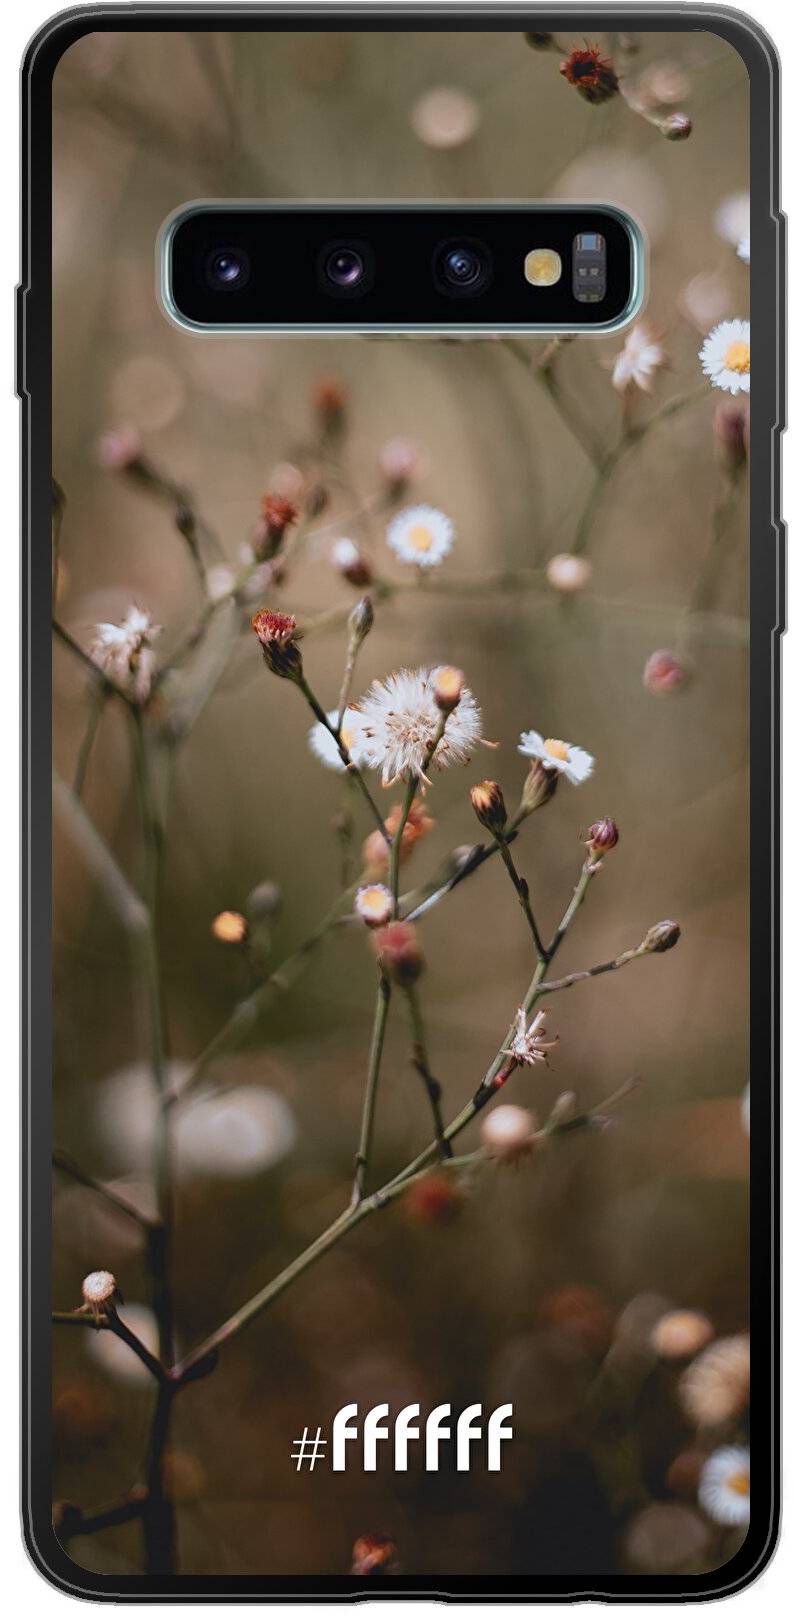 Flower Buds Galaxy S10